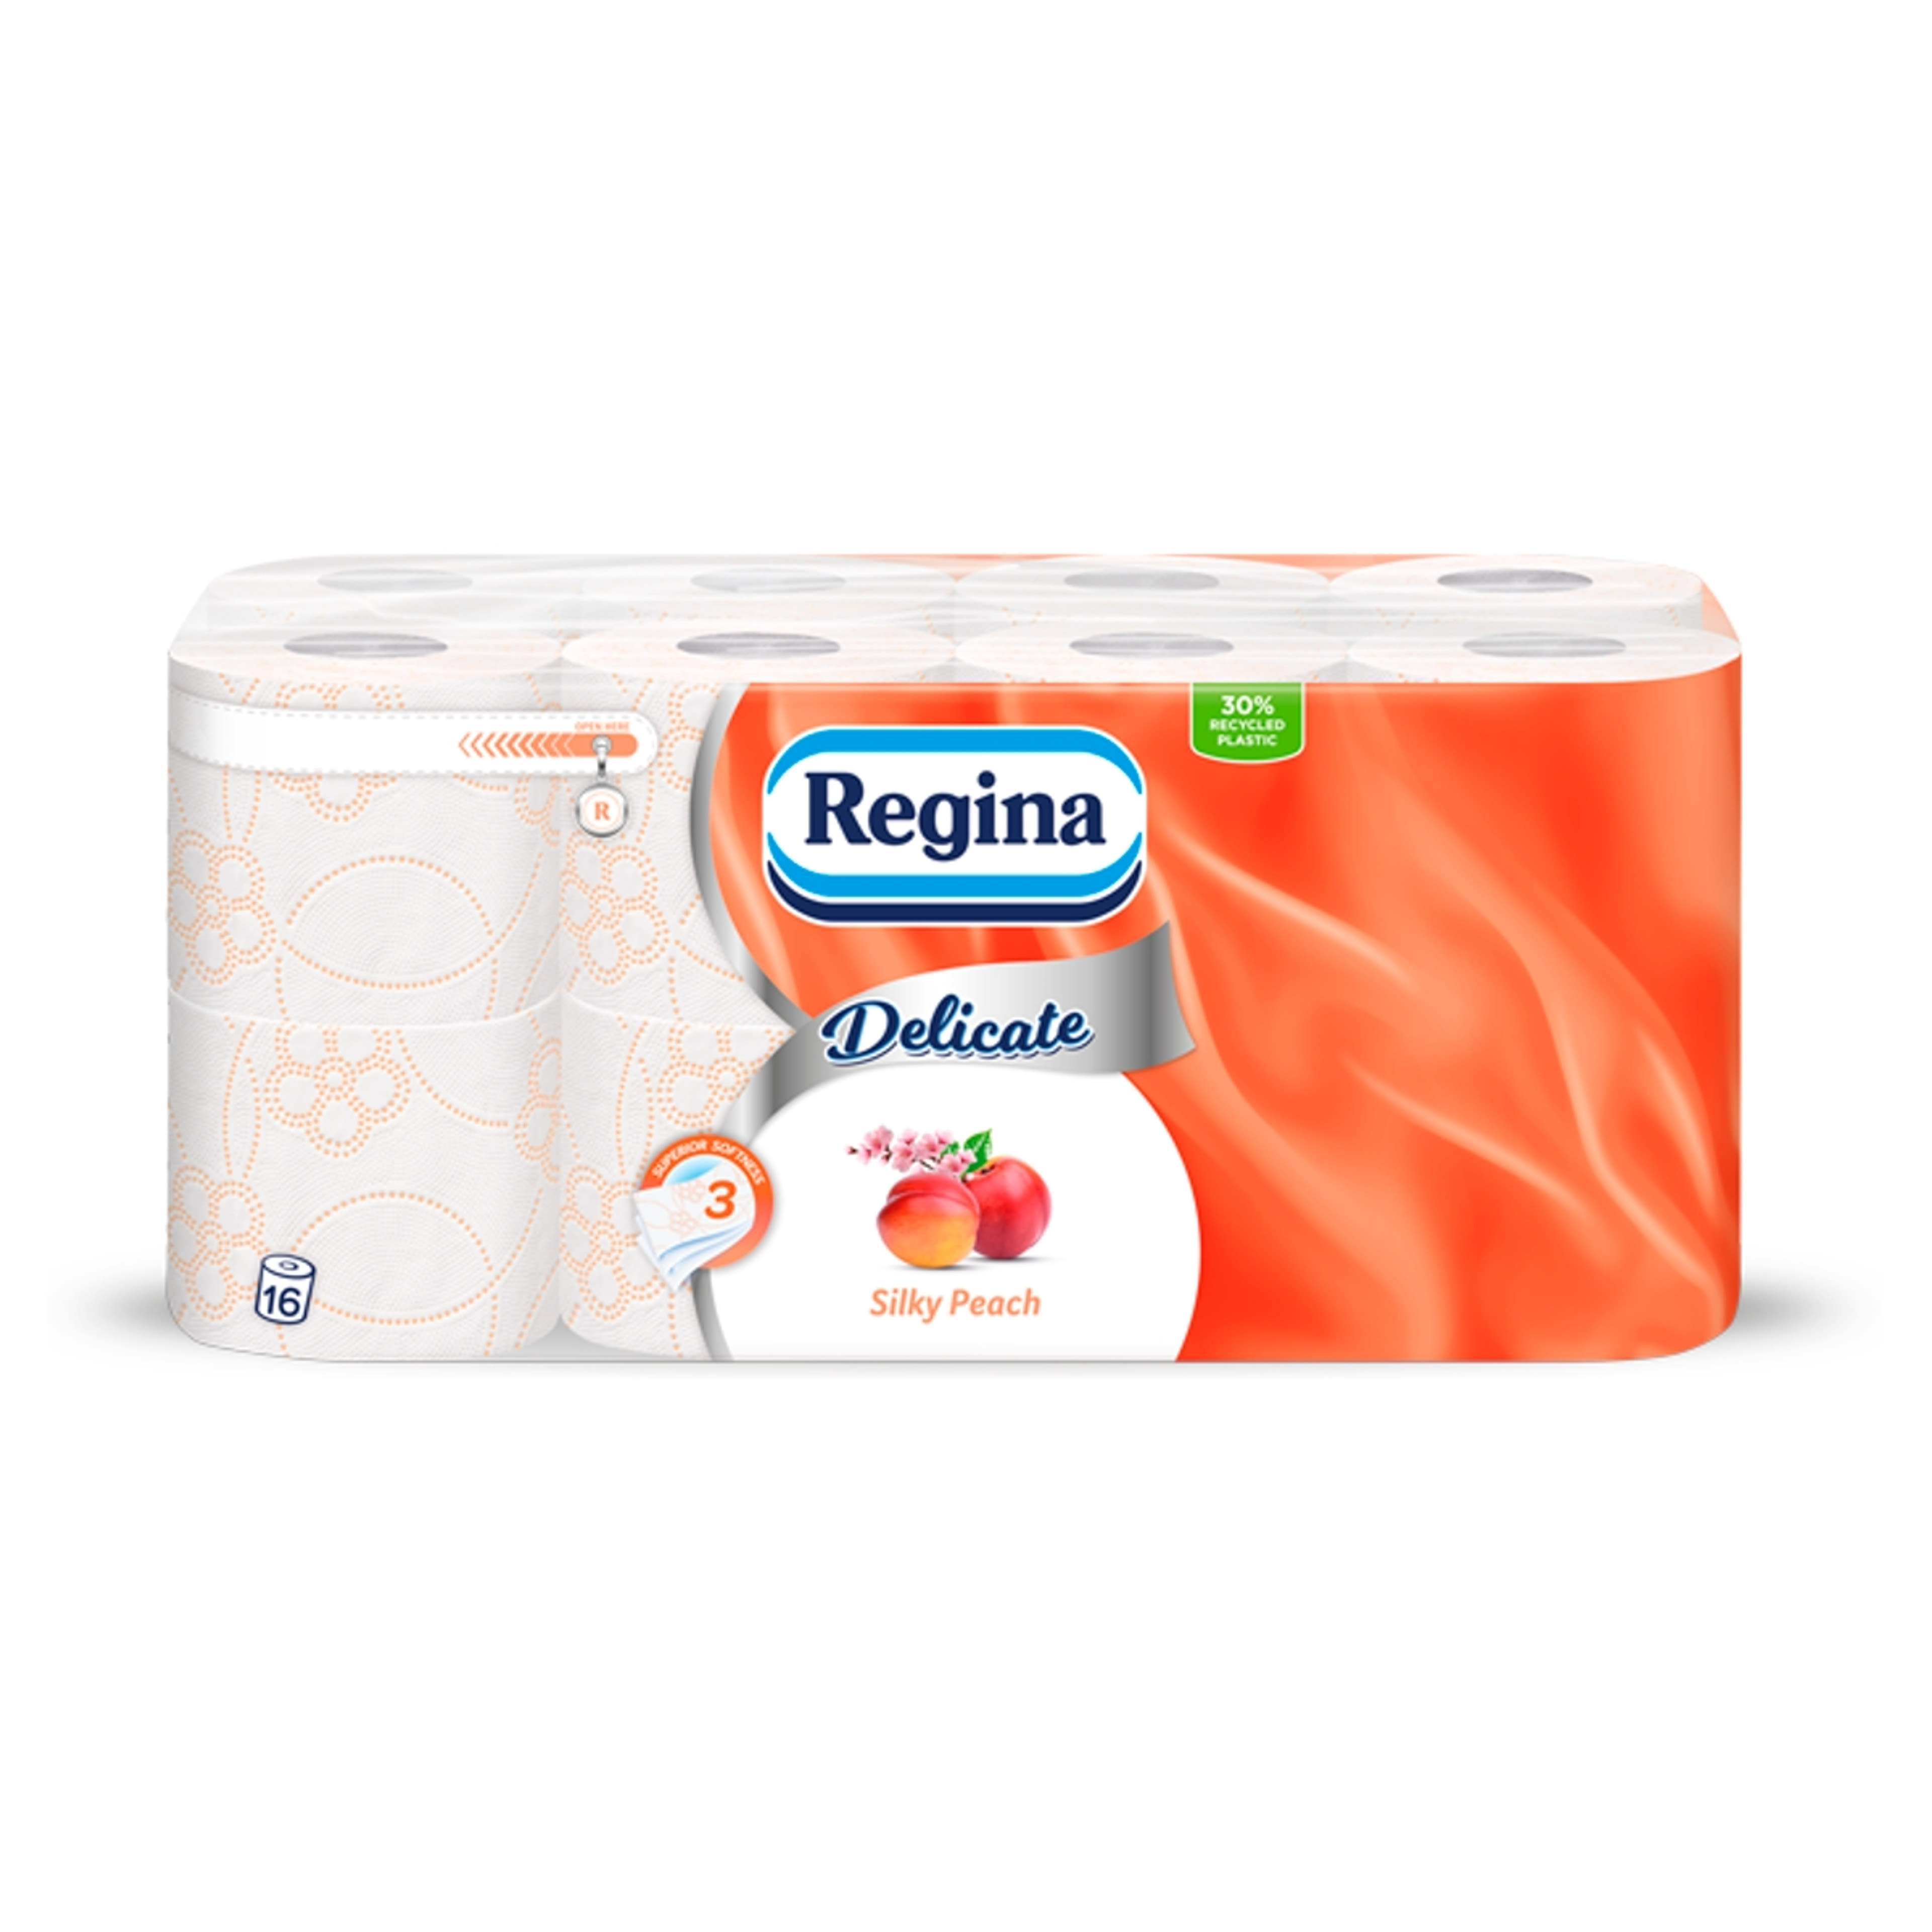 Regina Delicate Silky Peach toalettpapír 3 rétegű - 16 db